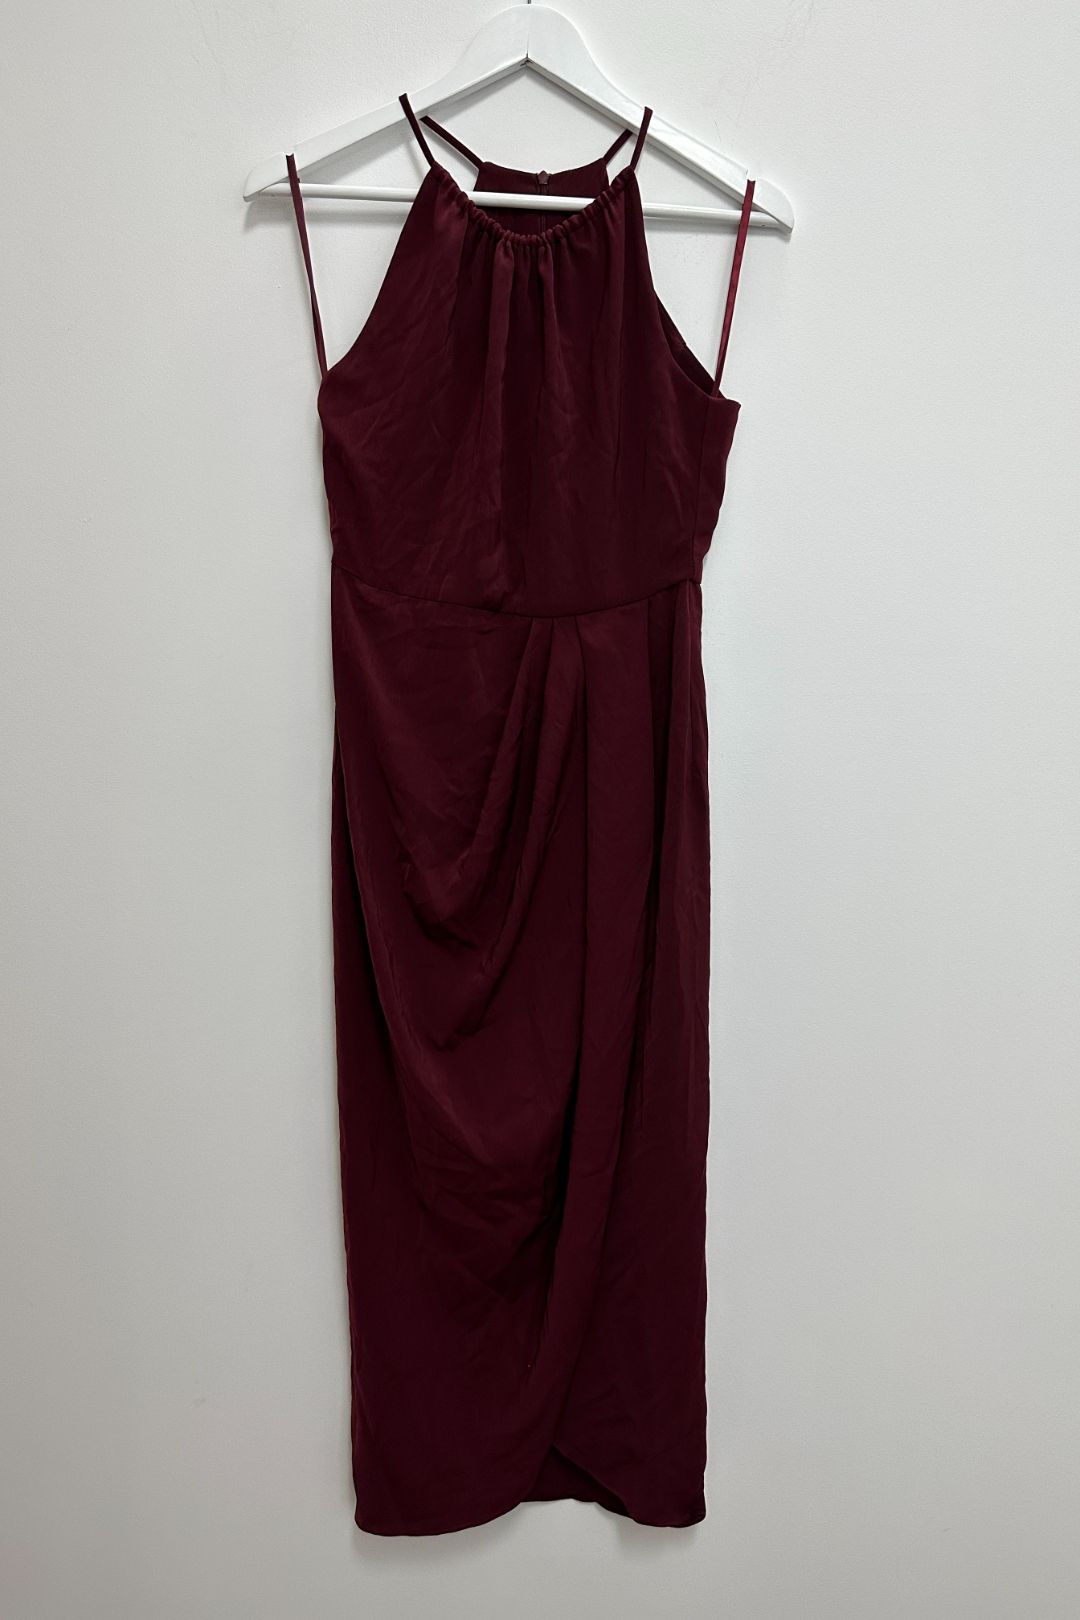 Shona Joy Ruched Asymmetric Dress in Maroon